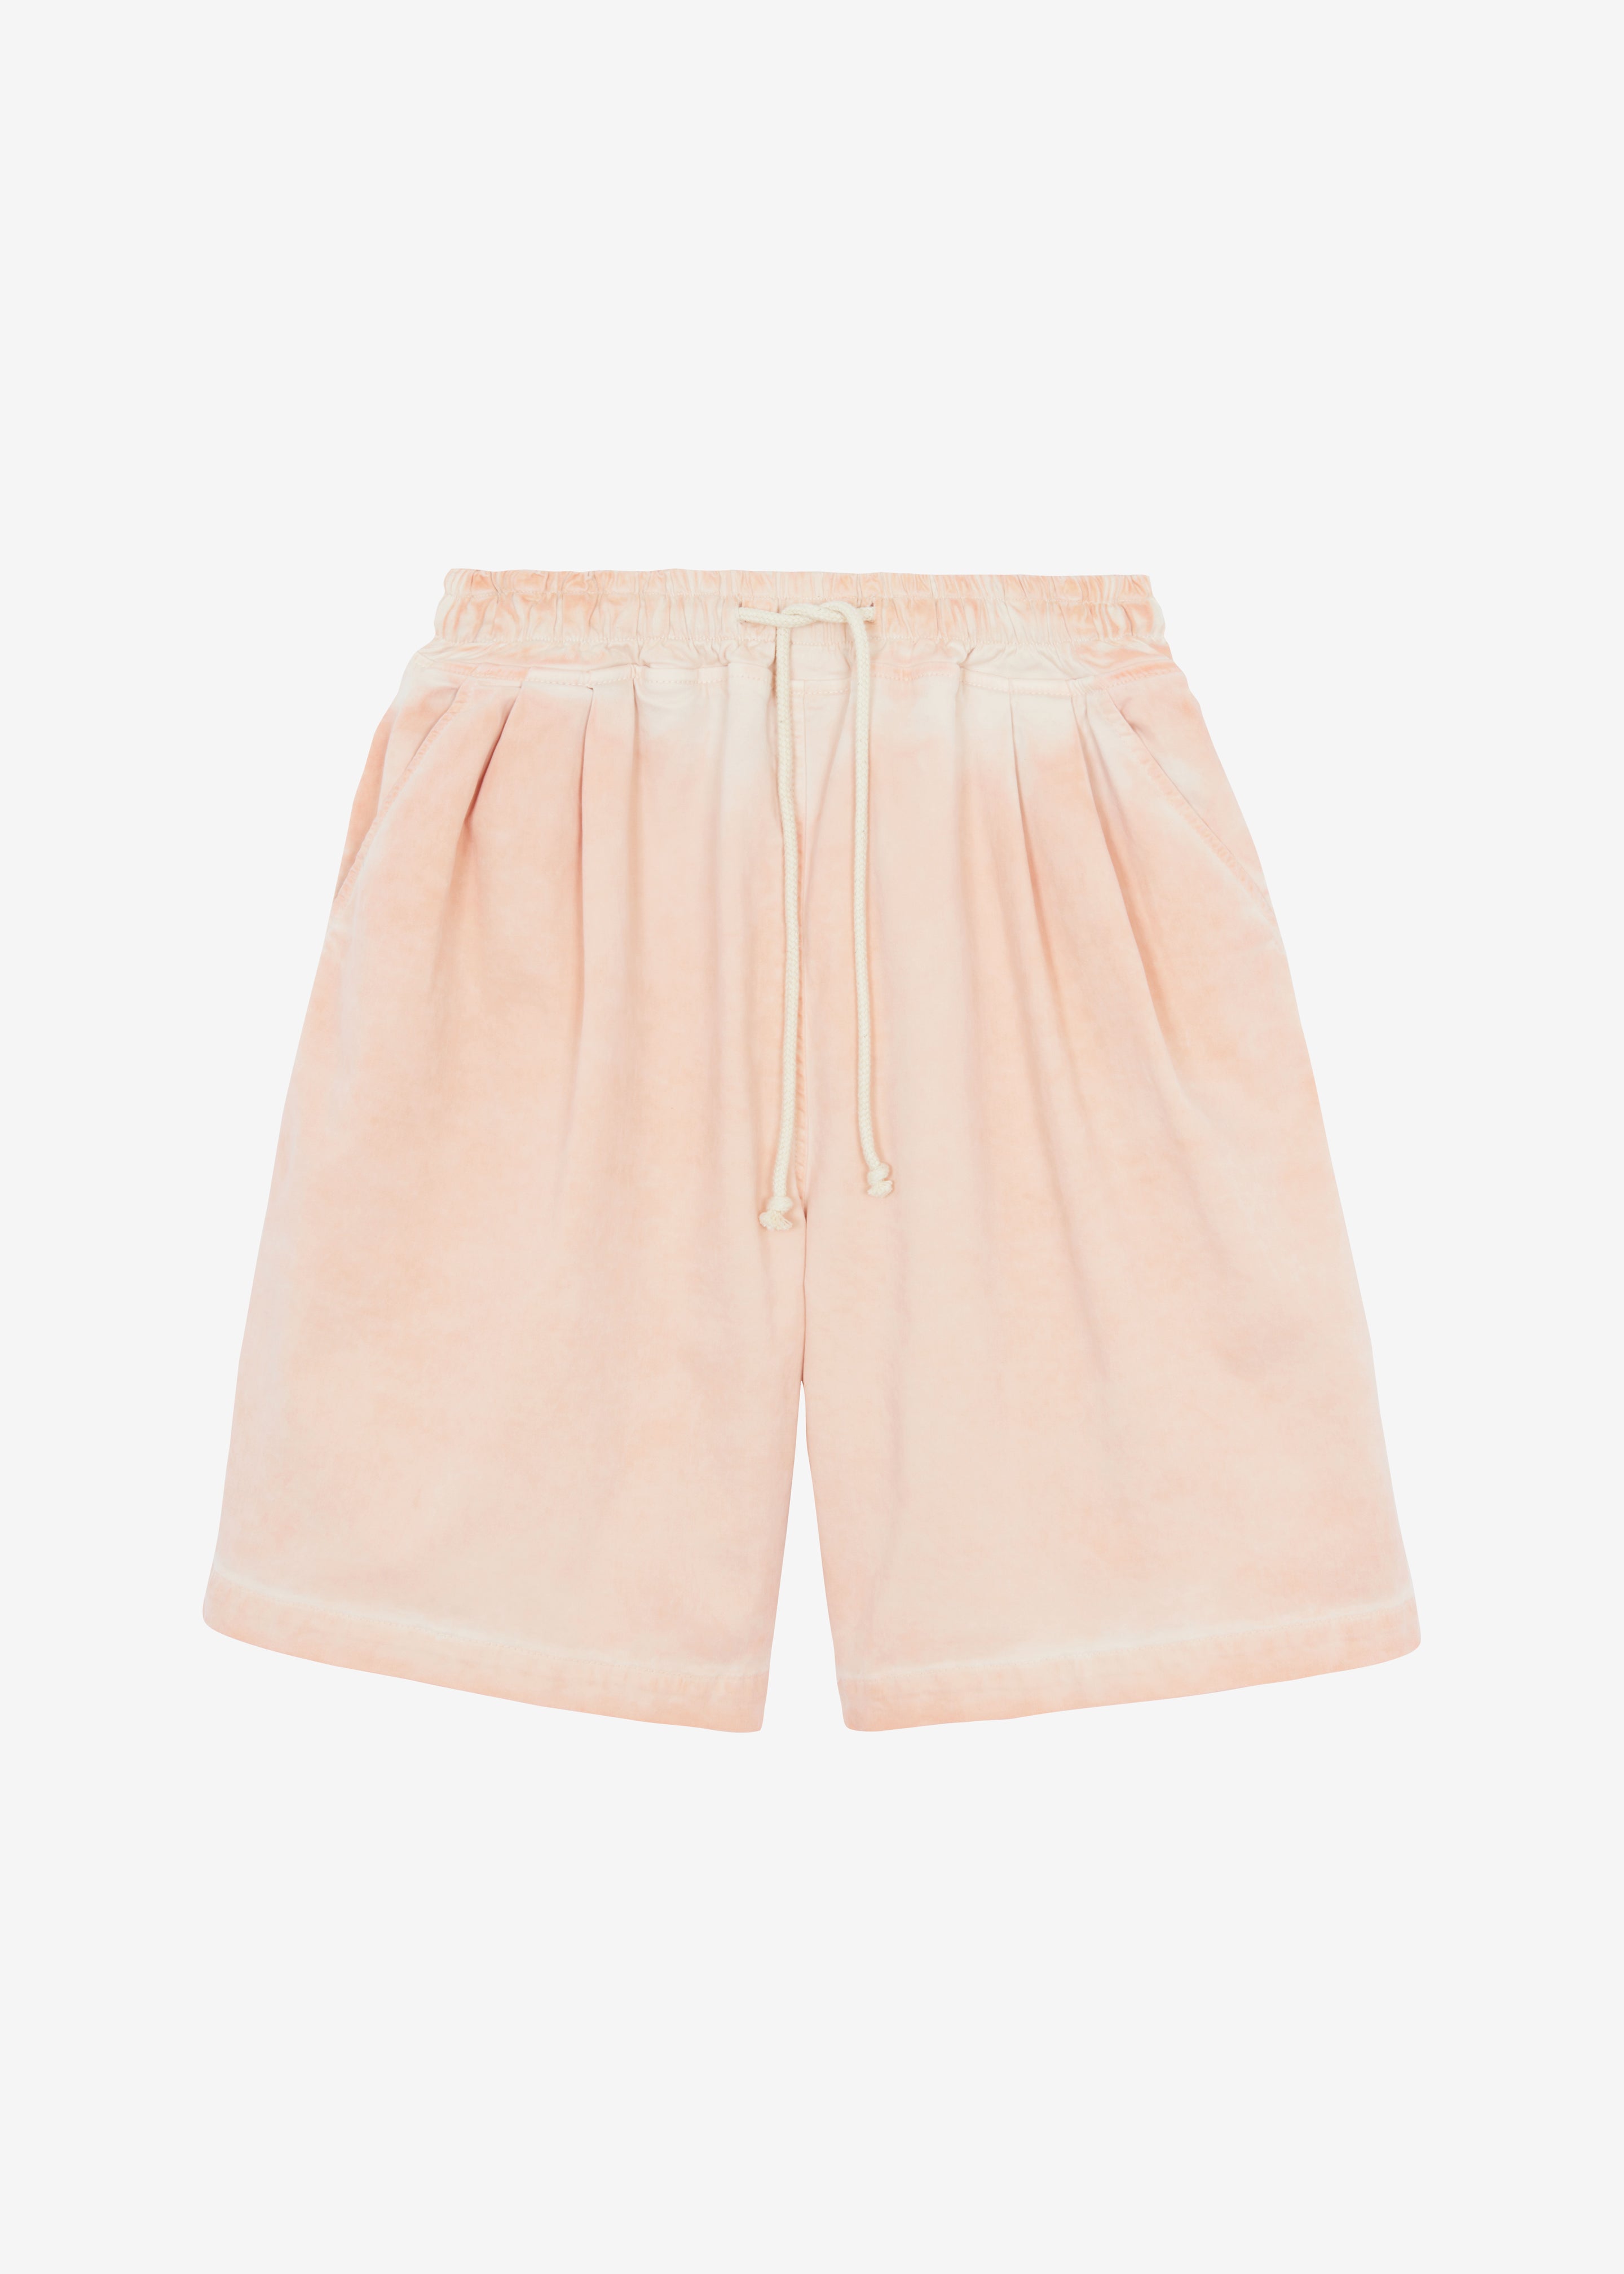 Pierce Shorts - Faded Pink - 7